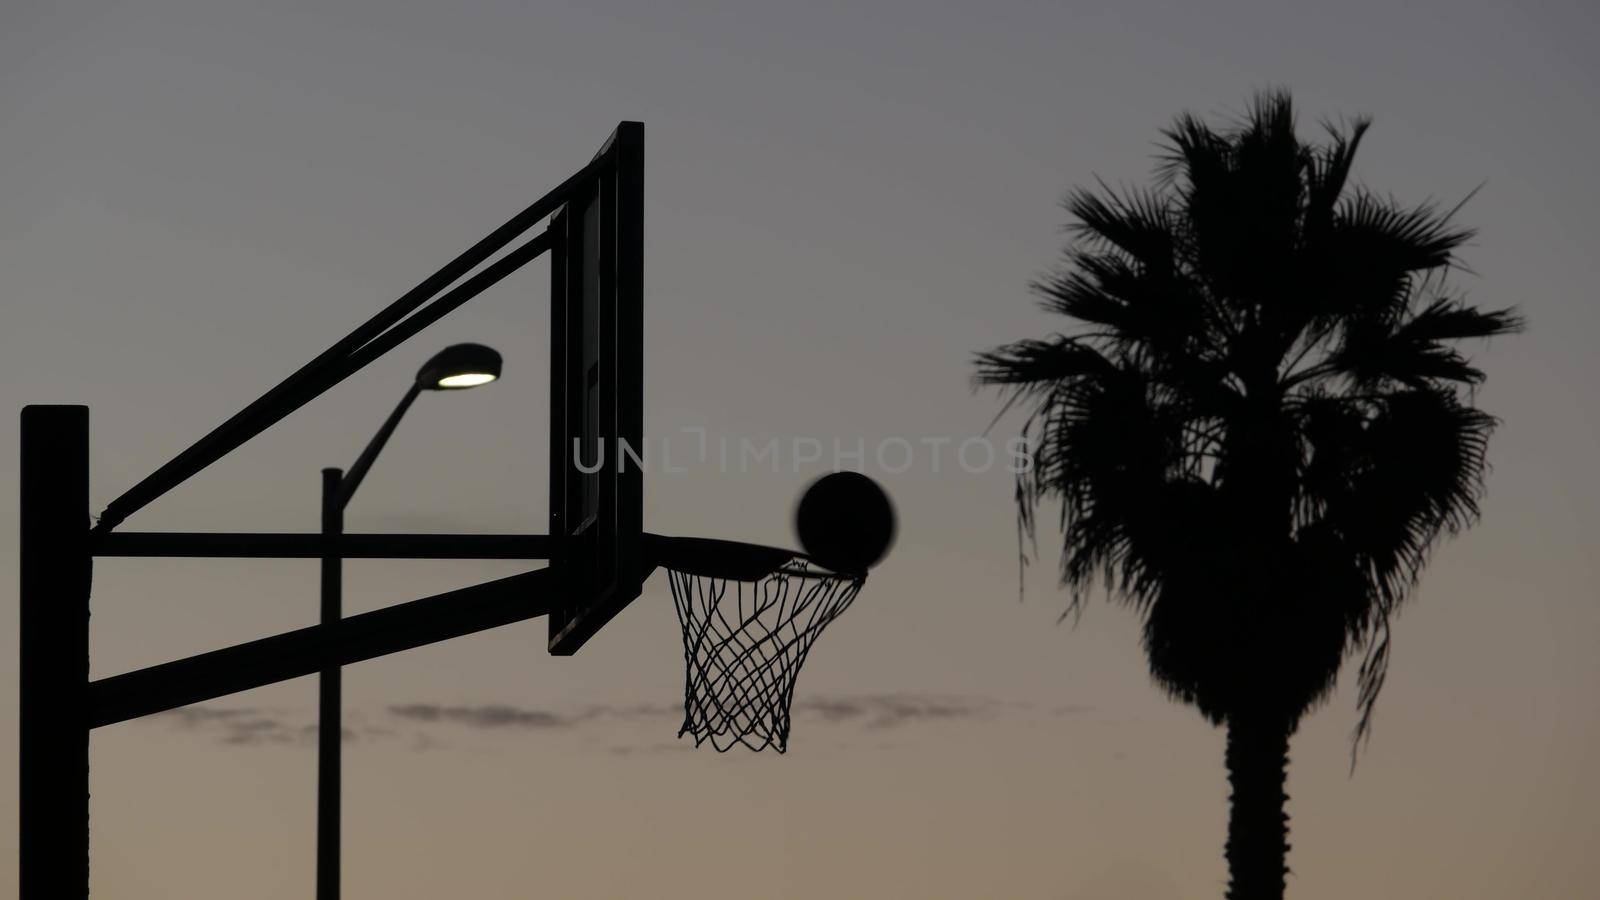 Hoop and net for basketball game silhouette. Basket ball court, California beach by DogoraSun